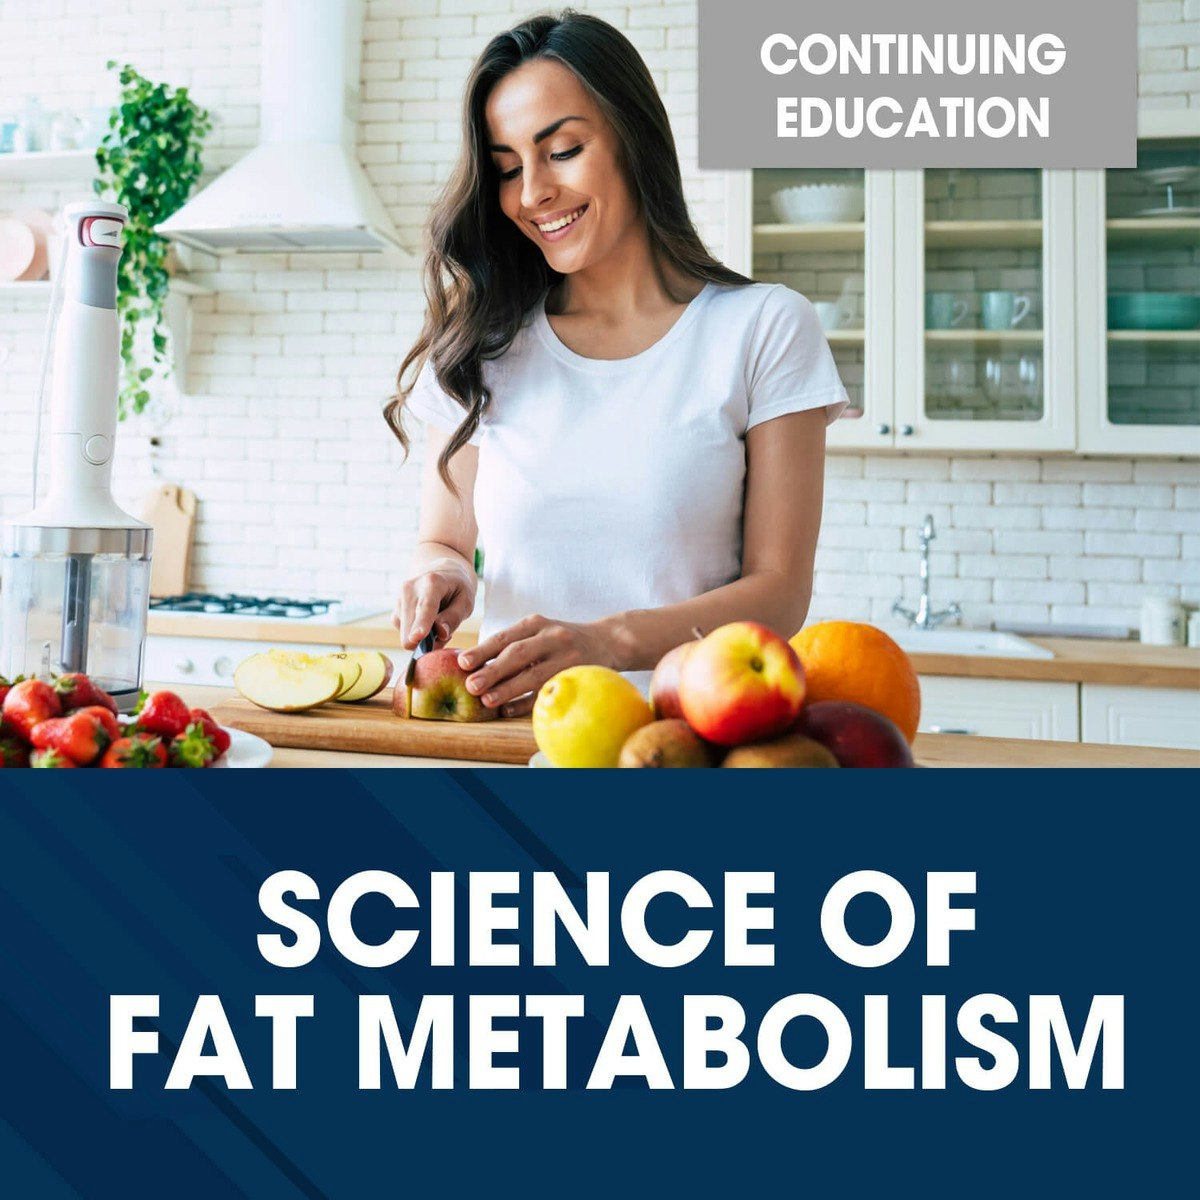 Fat metabolism science